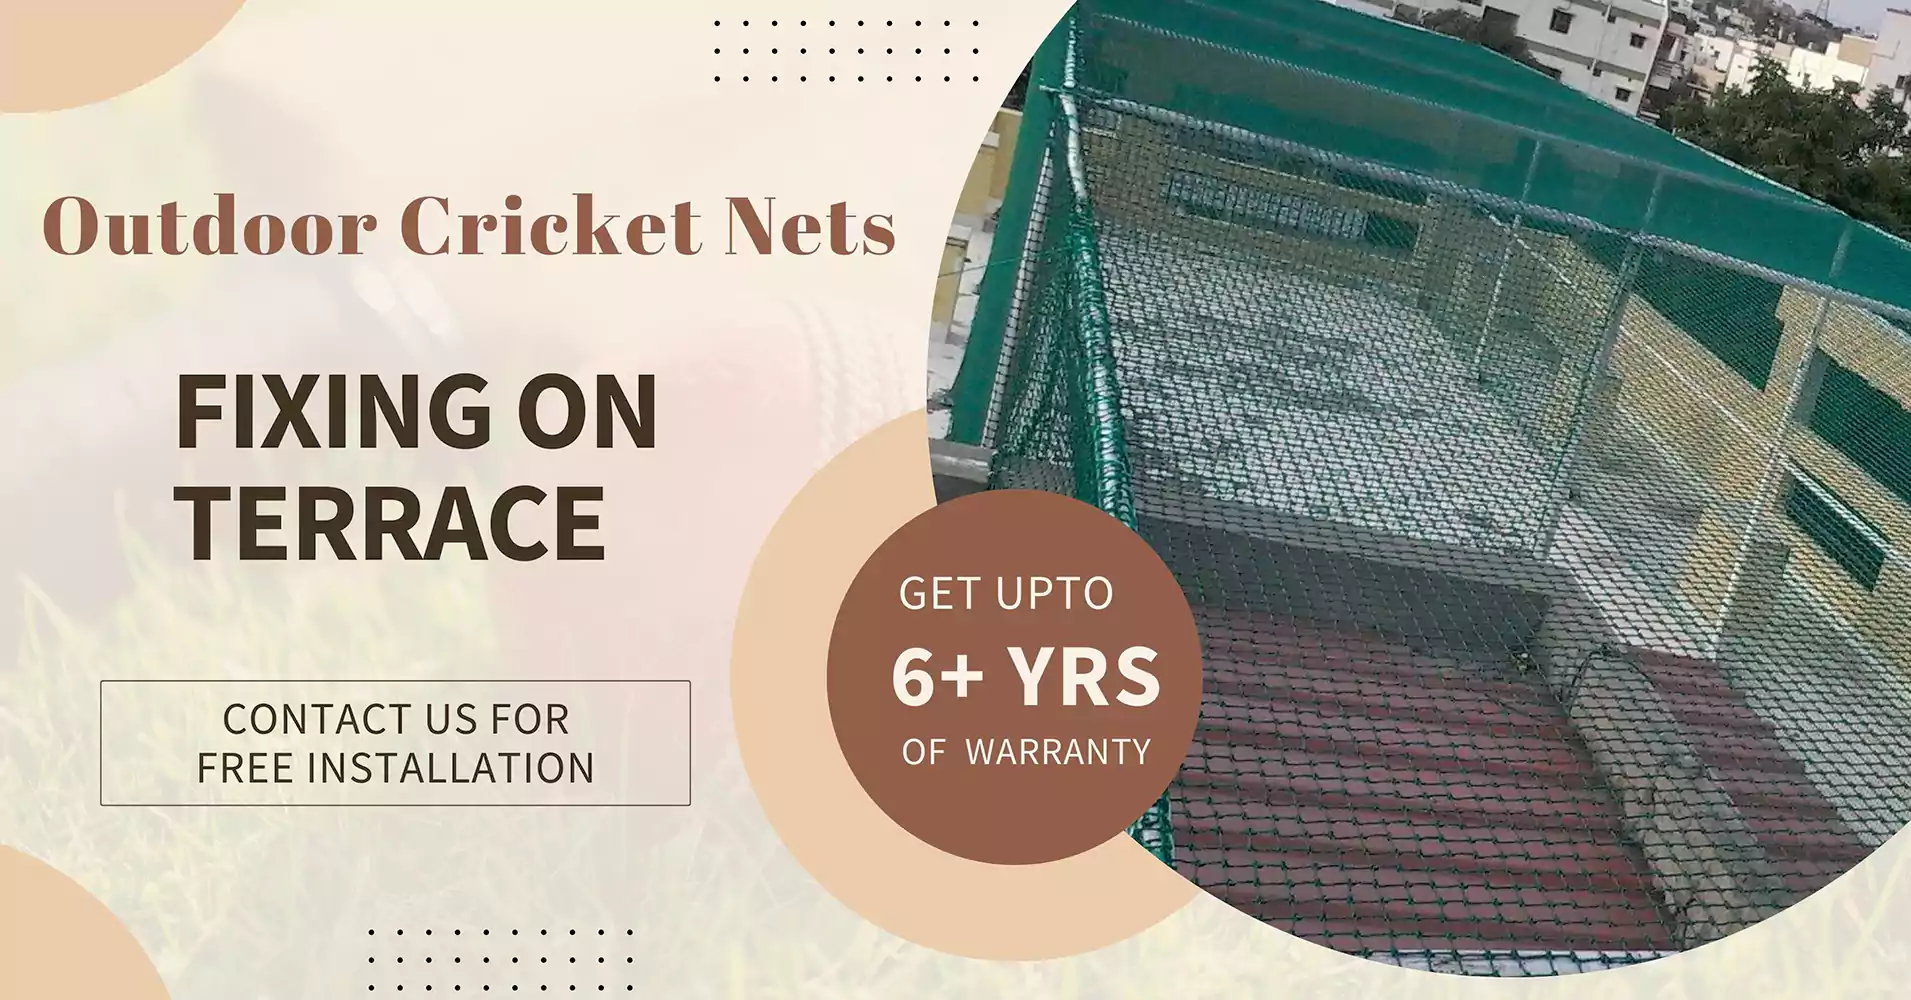 Terrace Cricket Net Installation in Hyderabad